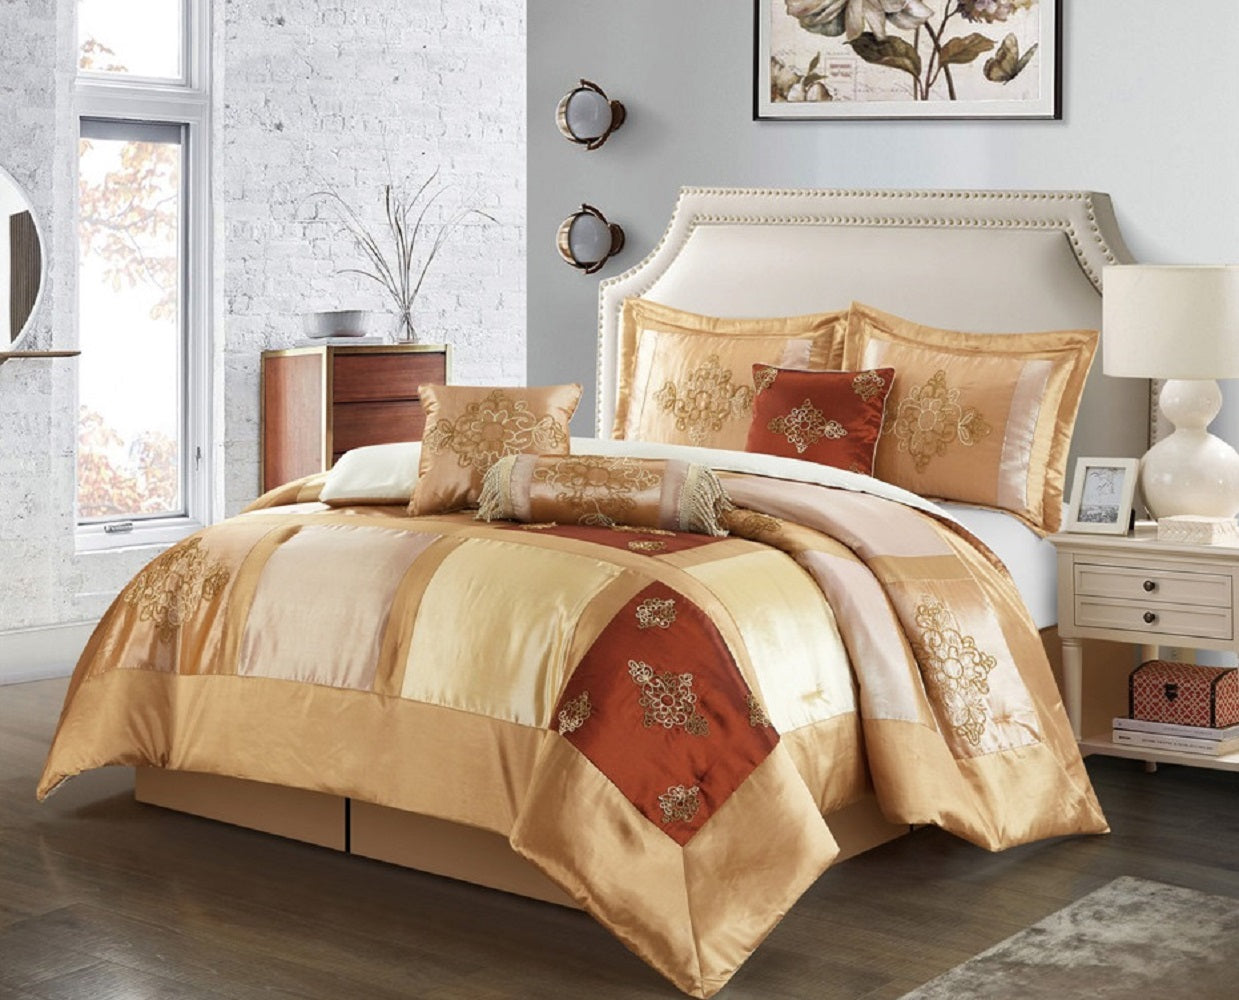 Joycy 7 Piece Embellished Comforter Set, Gold